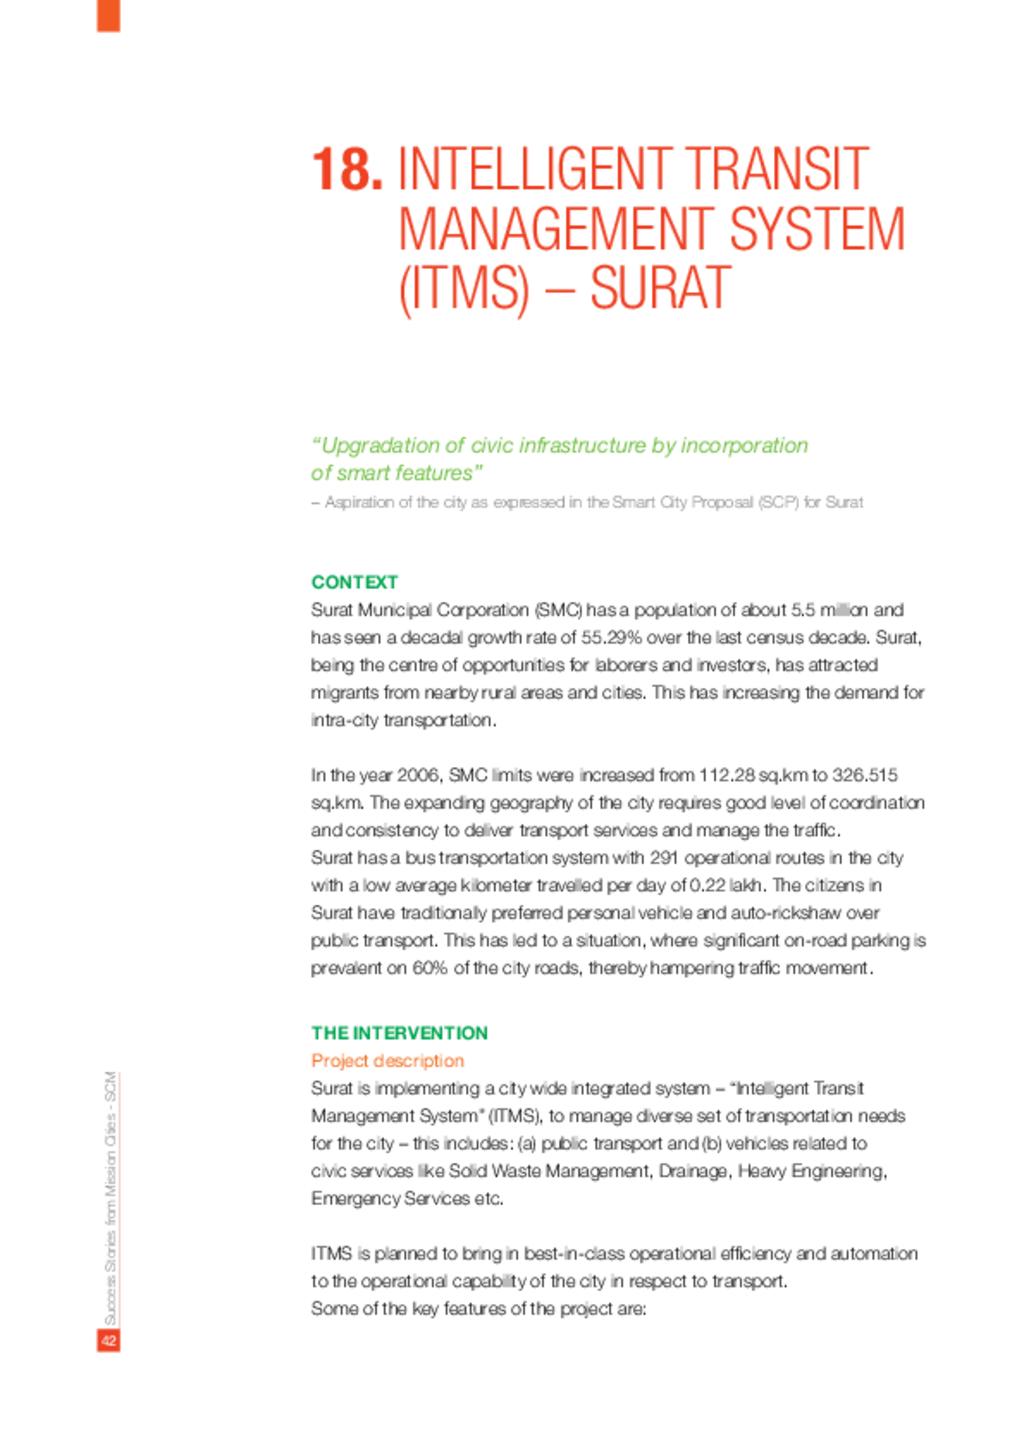 Intelligent Transit Management System (ITMS) – Surat